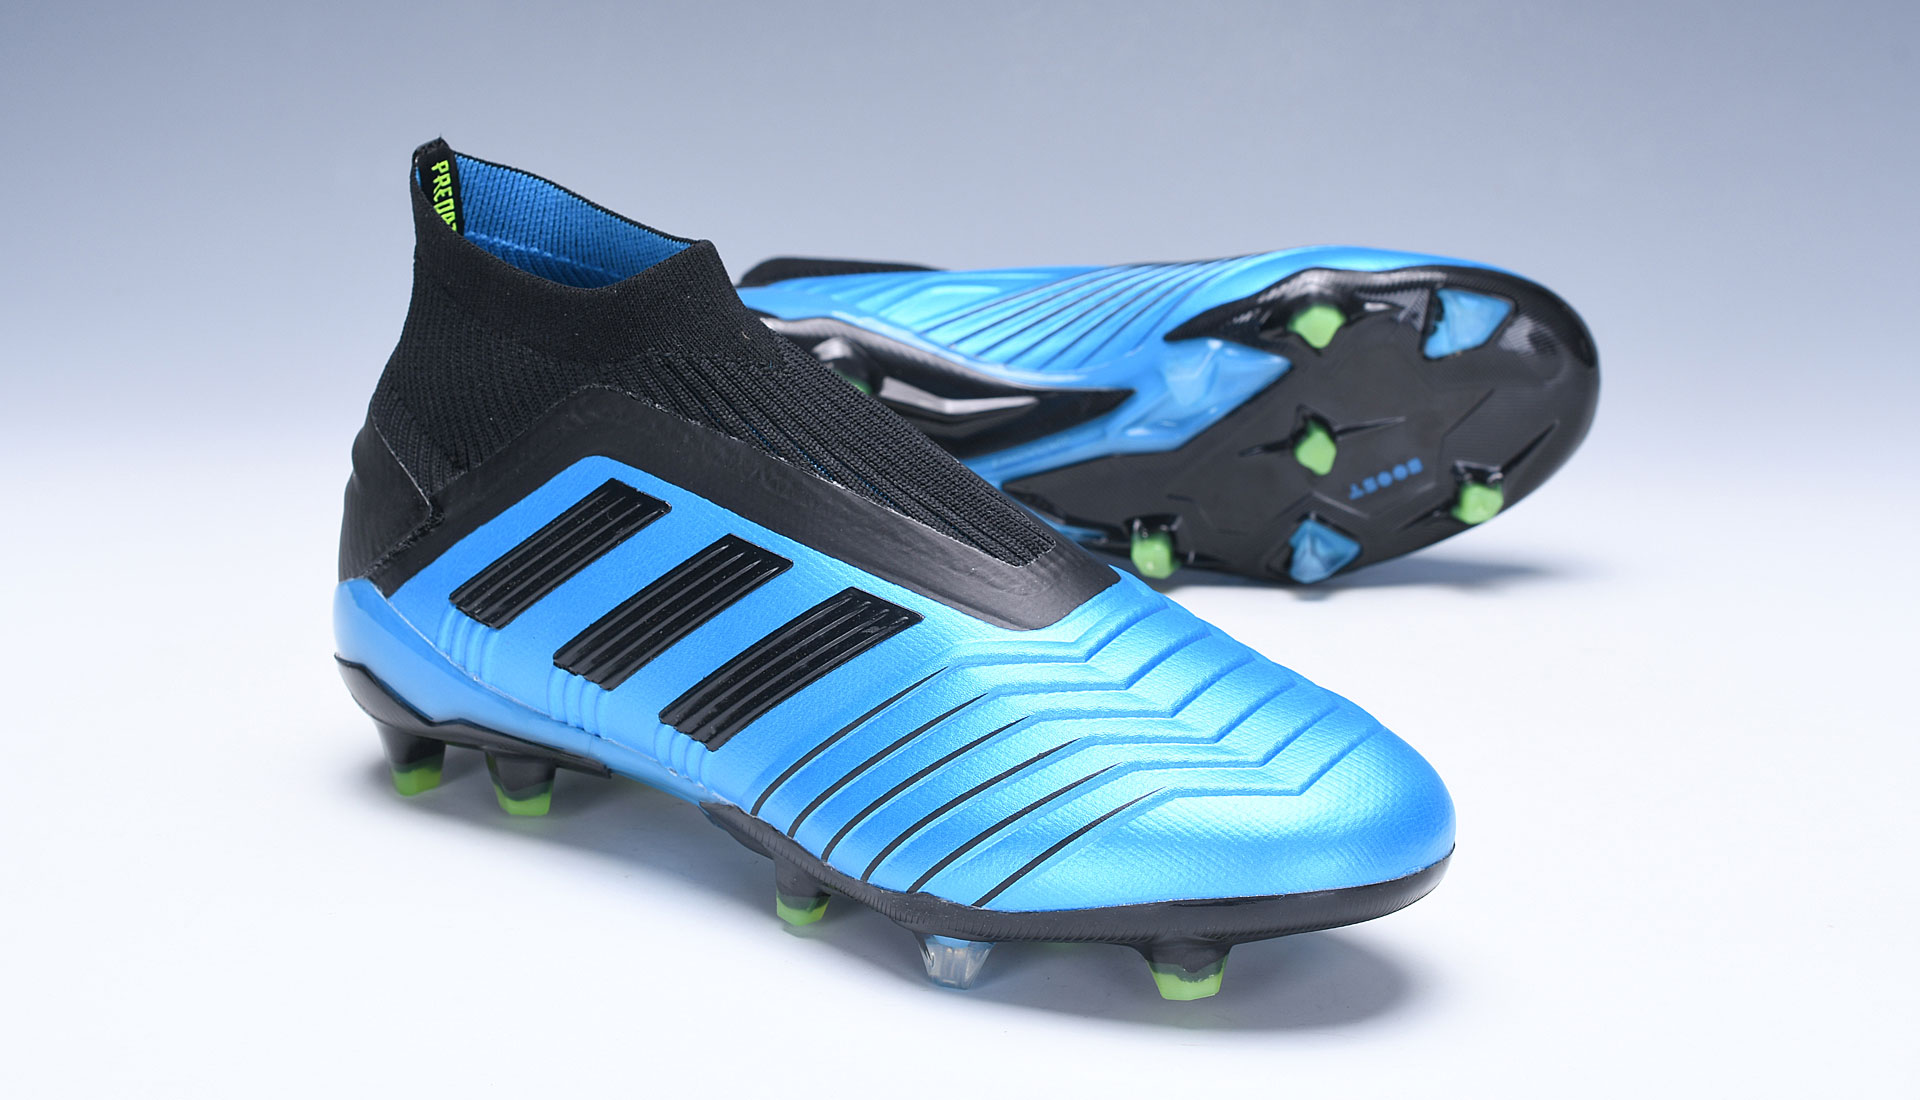 Adidas Predator 19+ SG 'Bright Cyan' F99965 - Superior Soccer Cleats for Optimal Performance